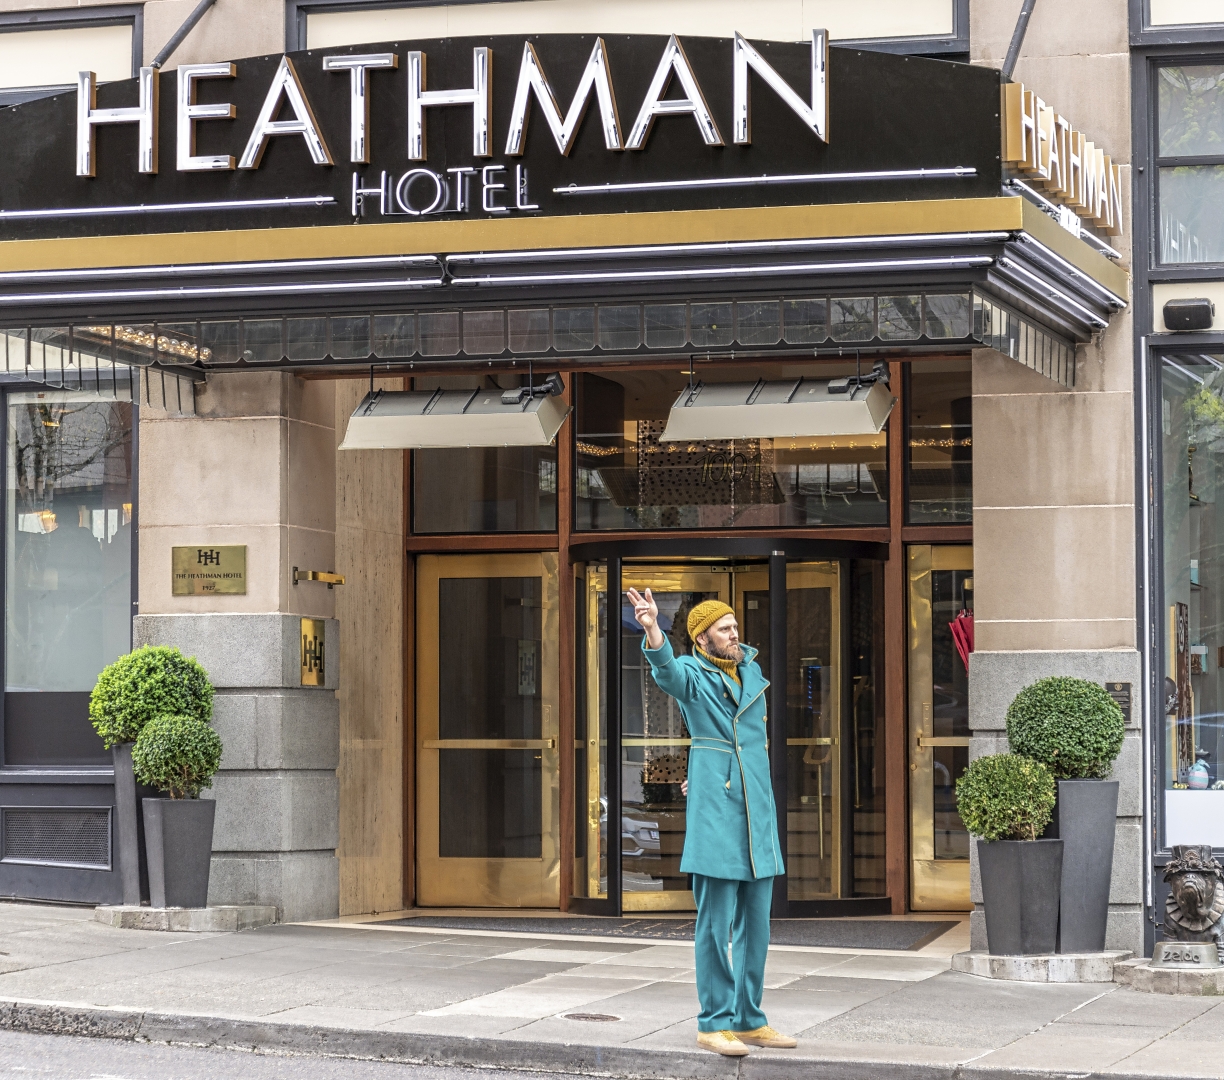 A man hailing a cab in front of the Heathman Hotel in Portland, Oregon.